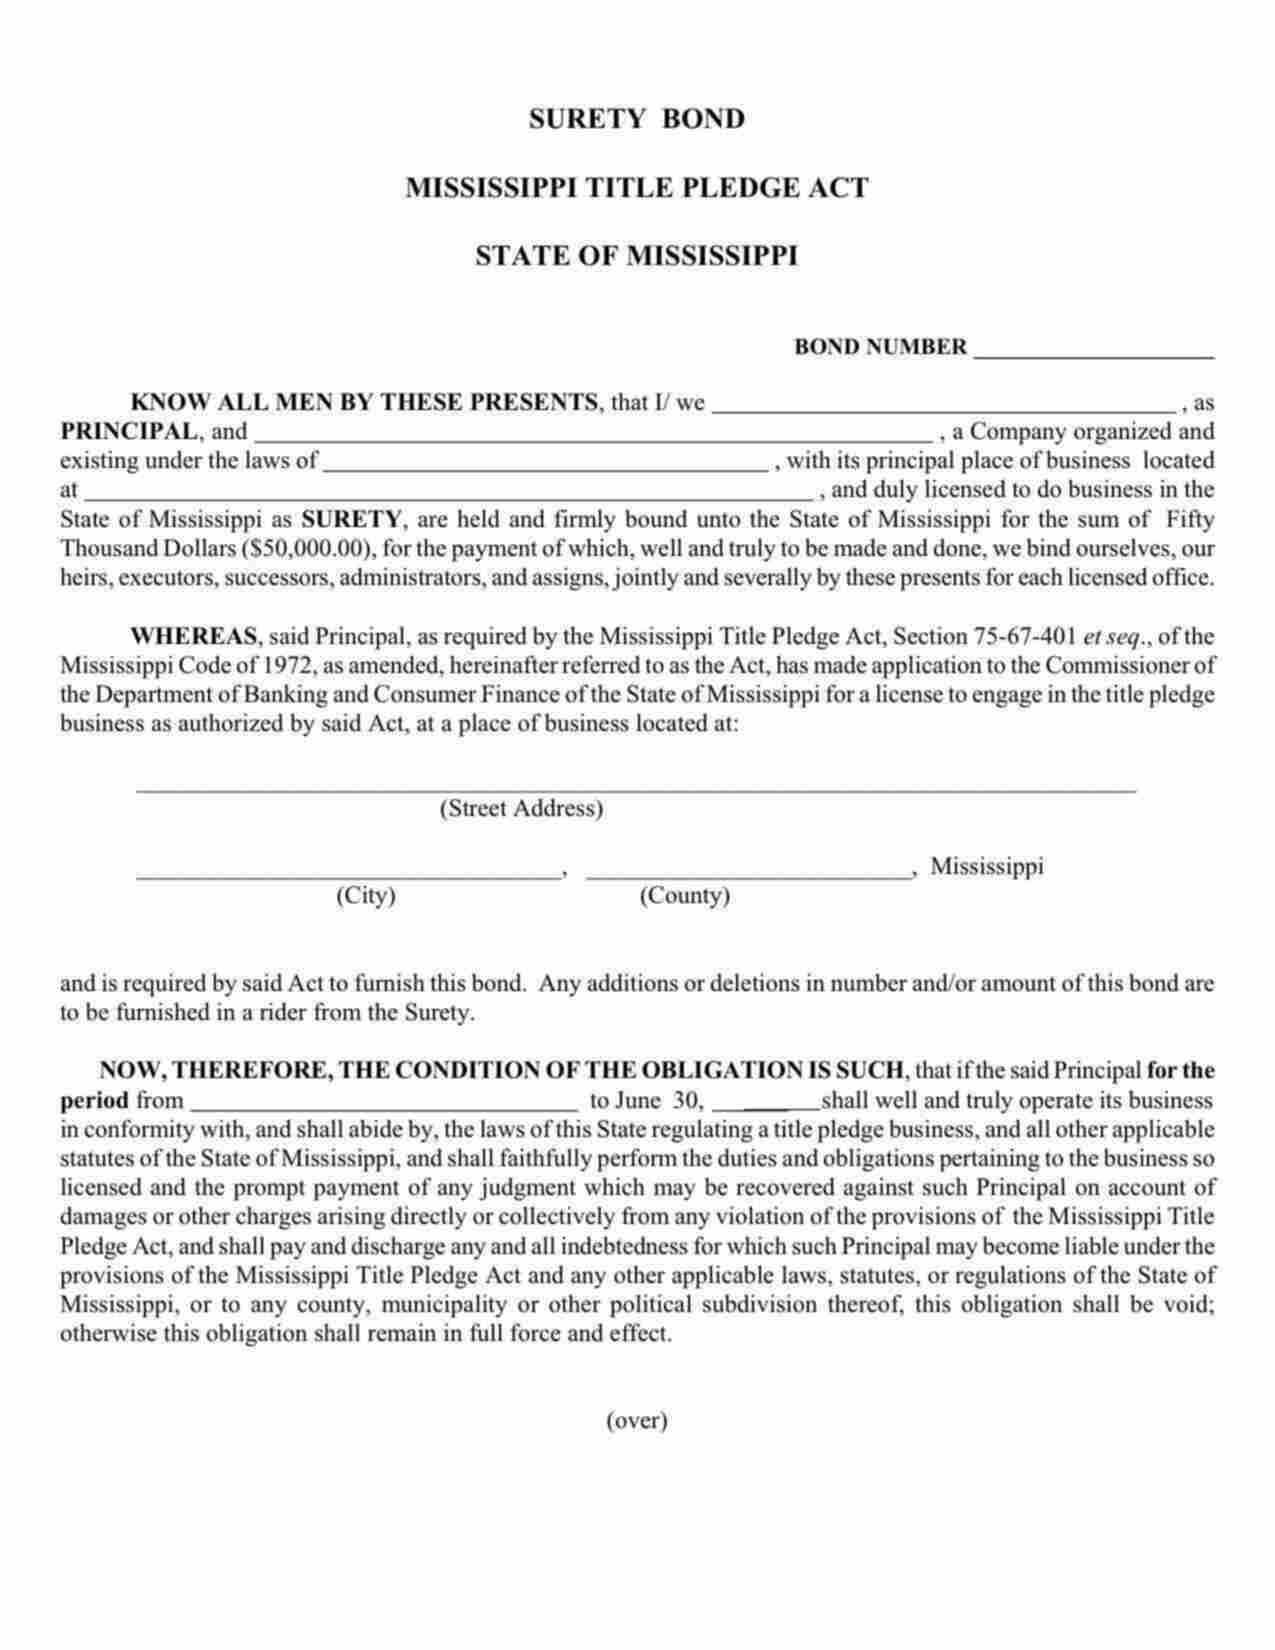 Mississippi Title Pledge Act Bond Form